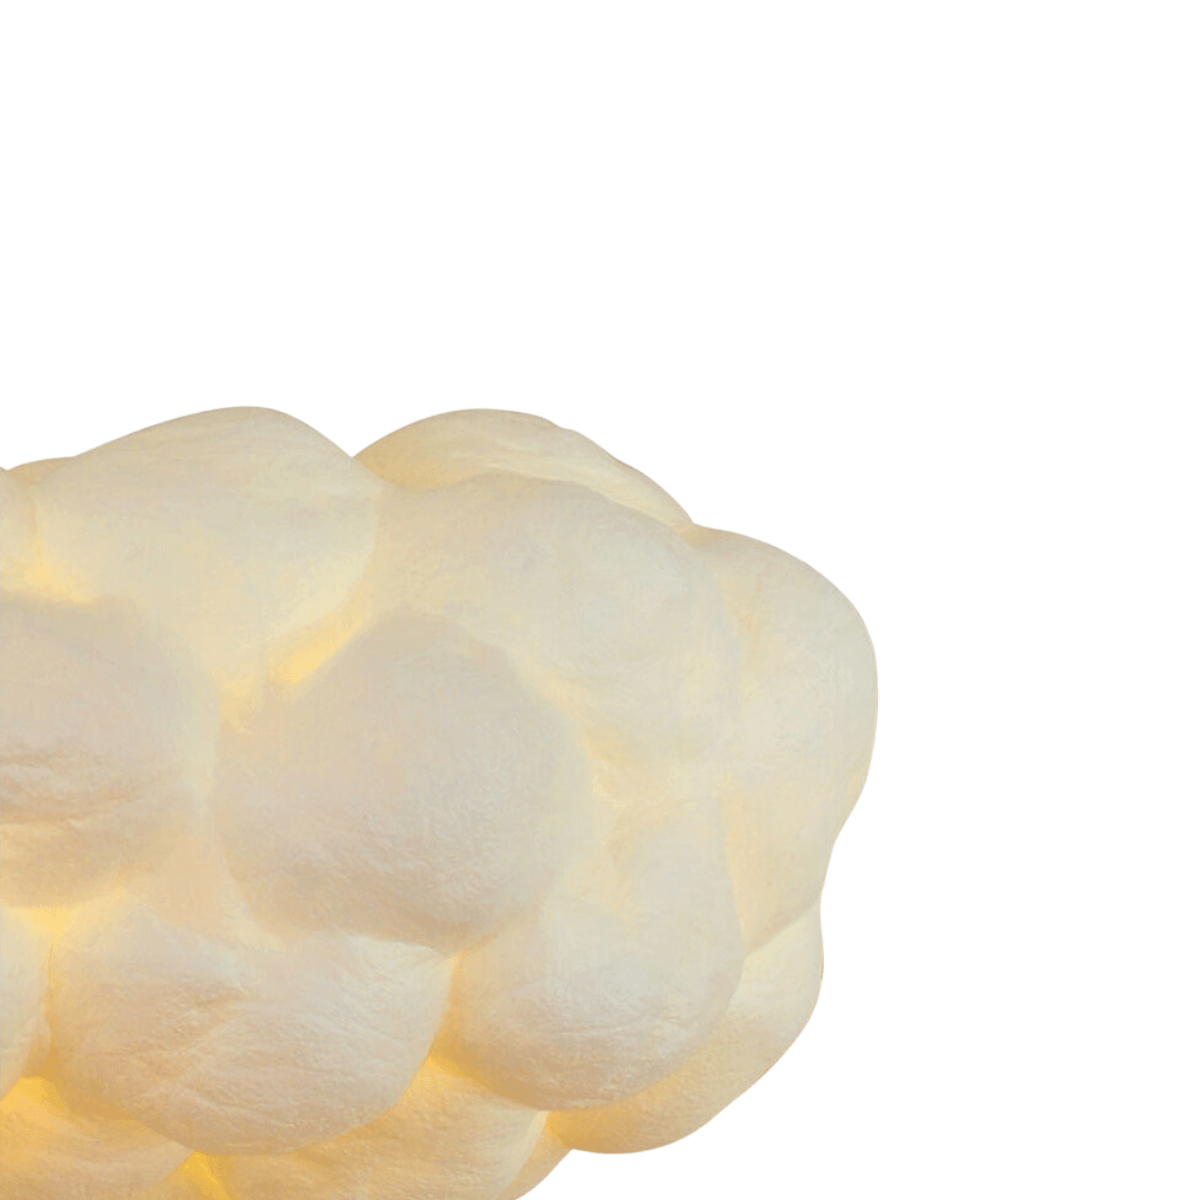 Luminária Pendente Moderna Minimalista Infantil Nuvem Clouds - Formato A / 30cm